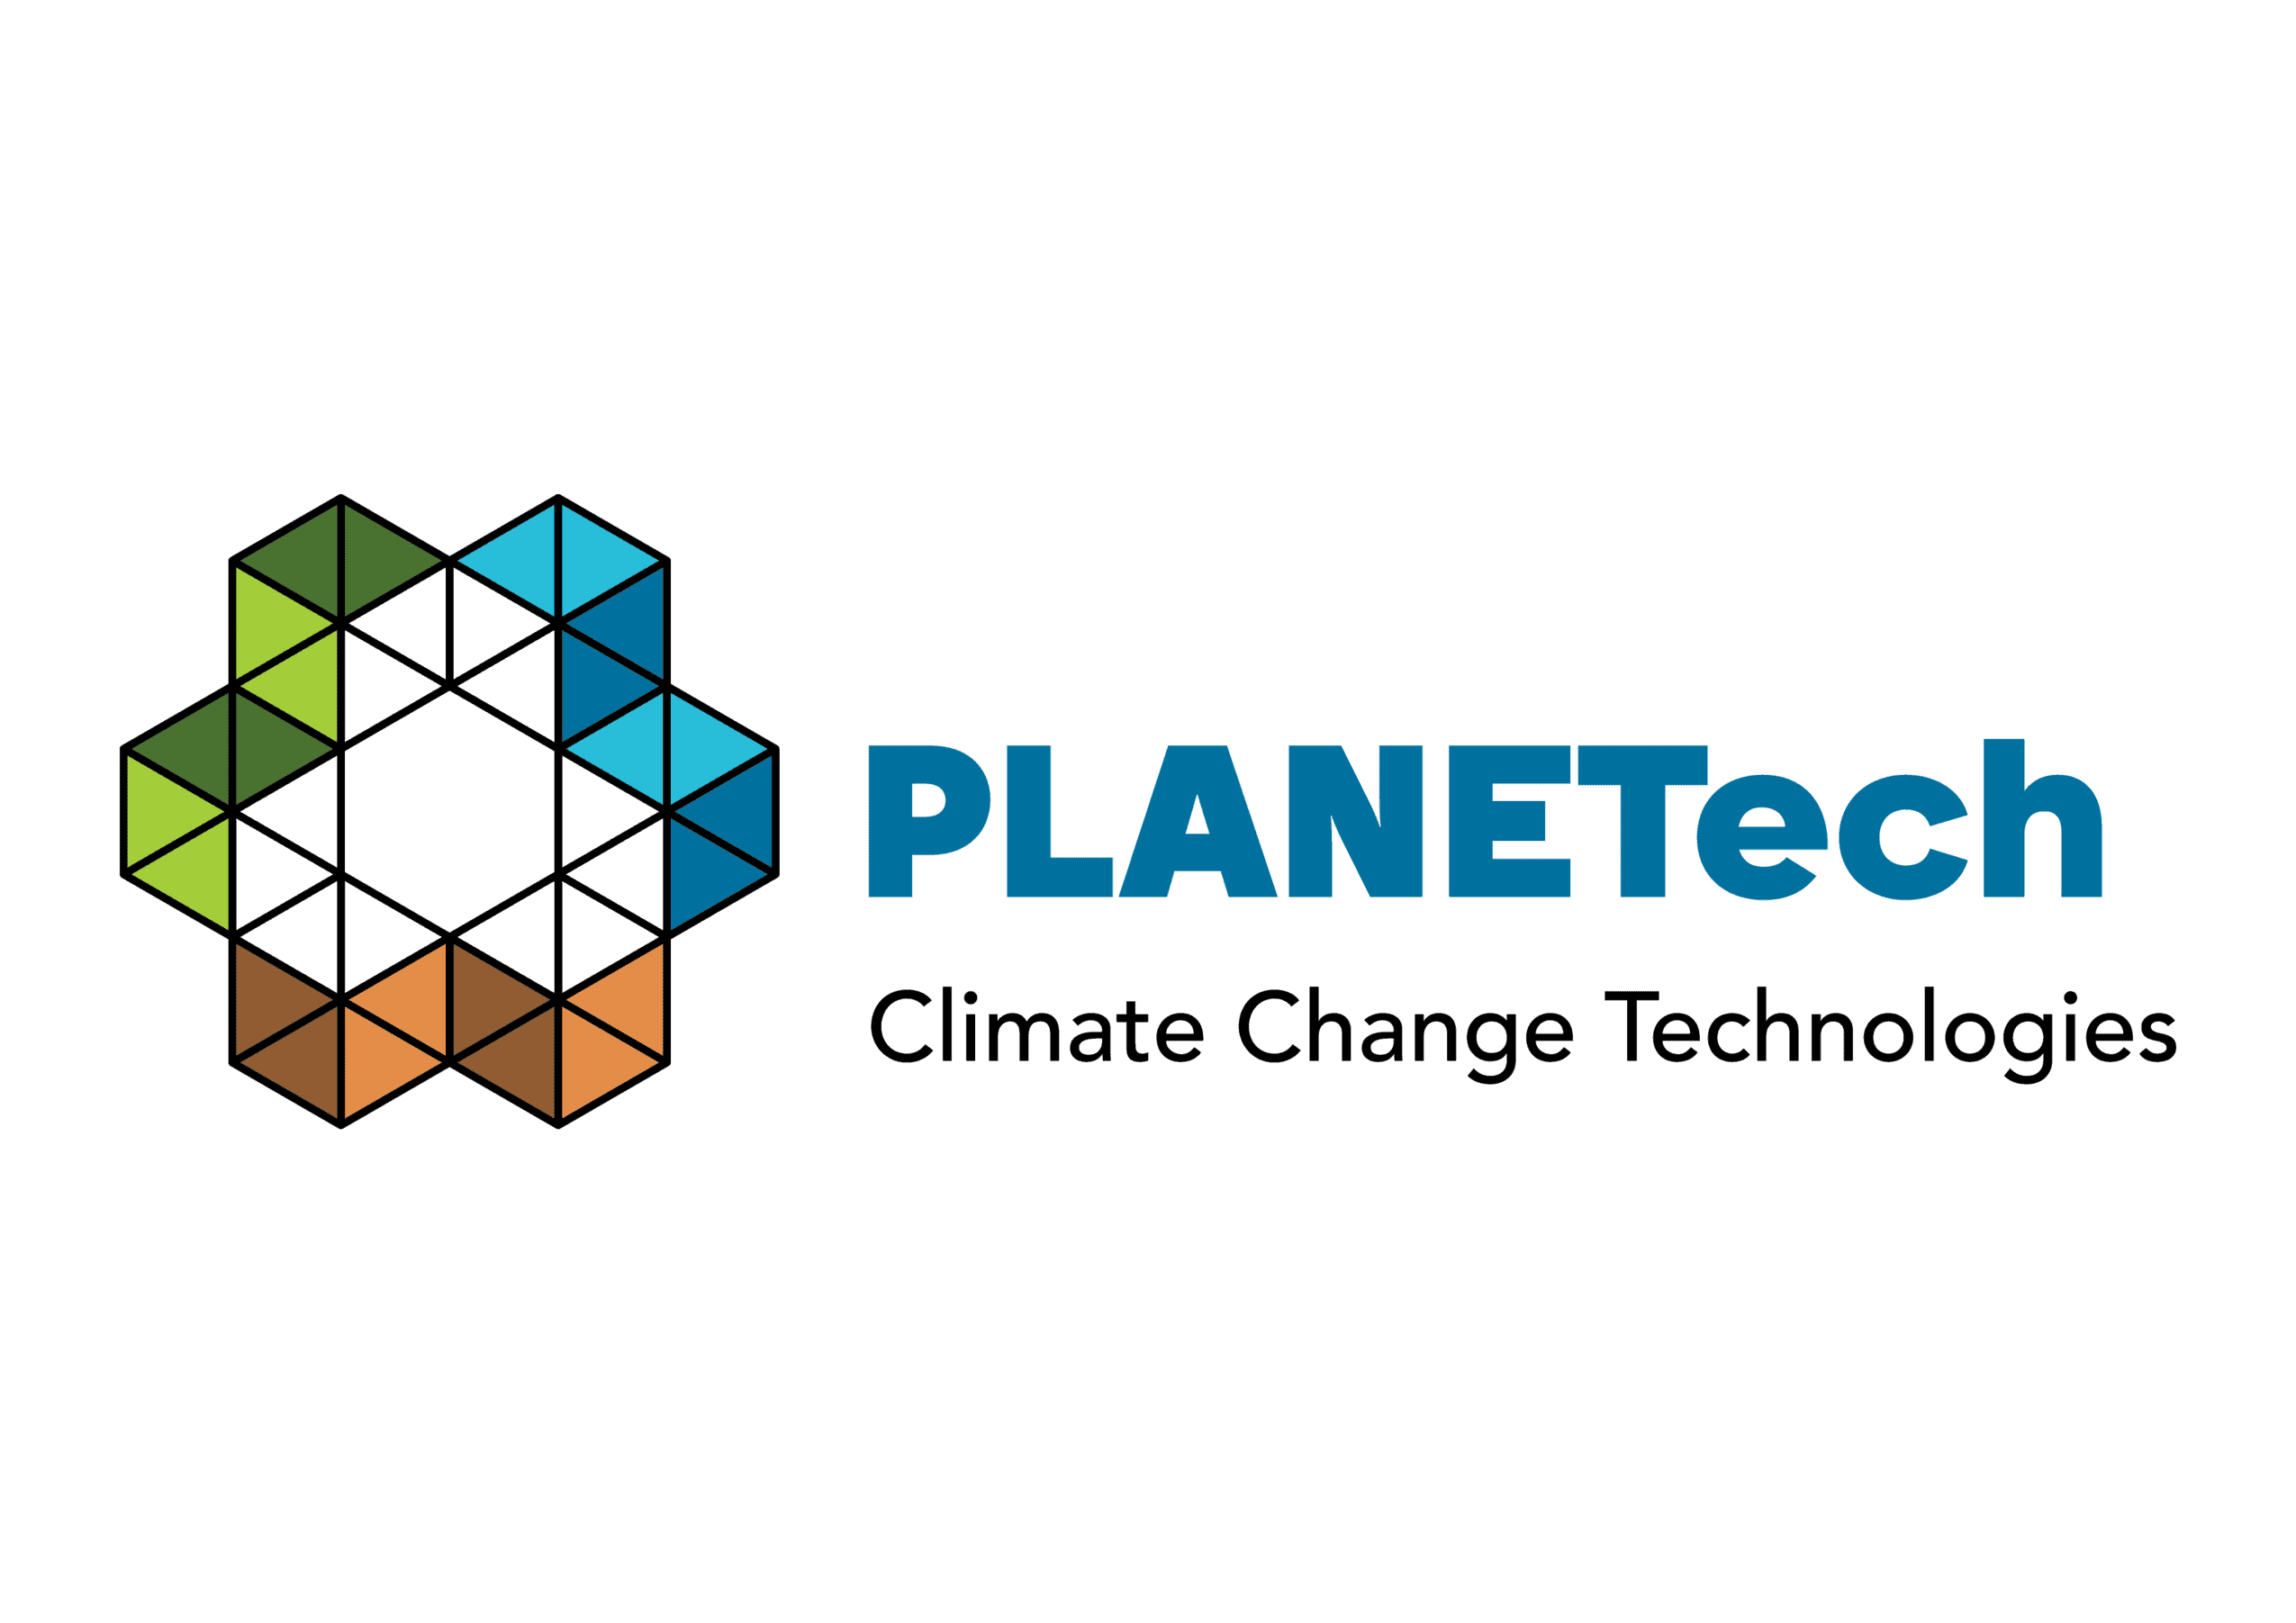 Plantech logo